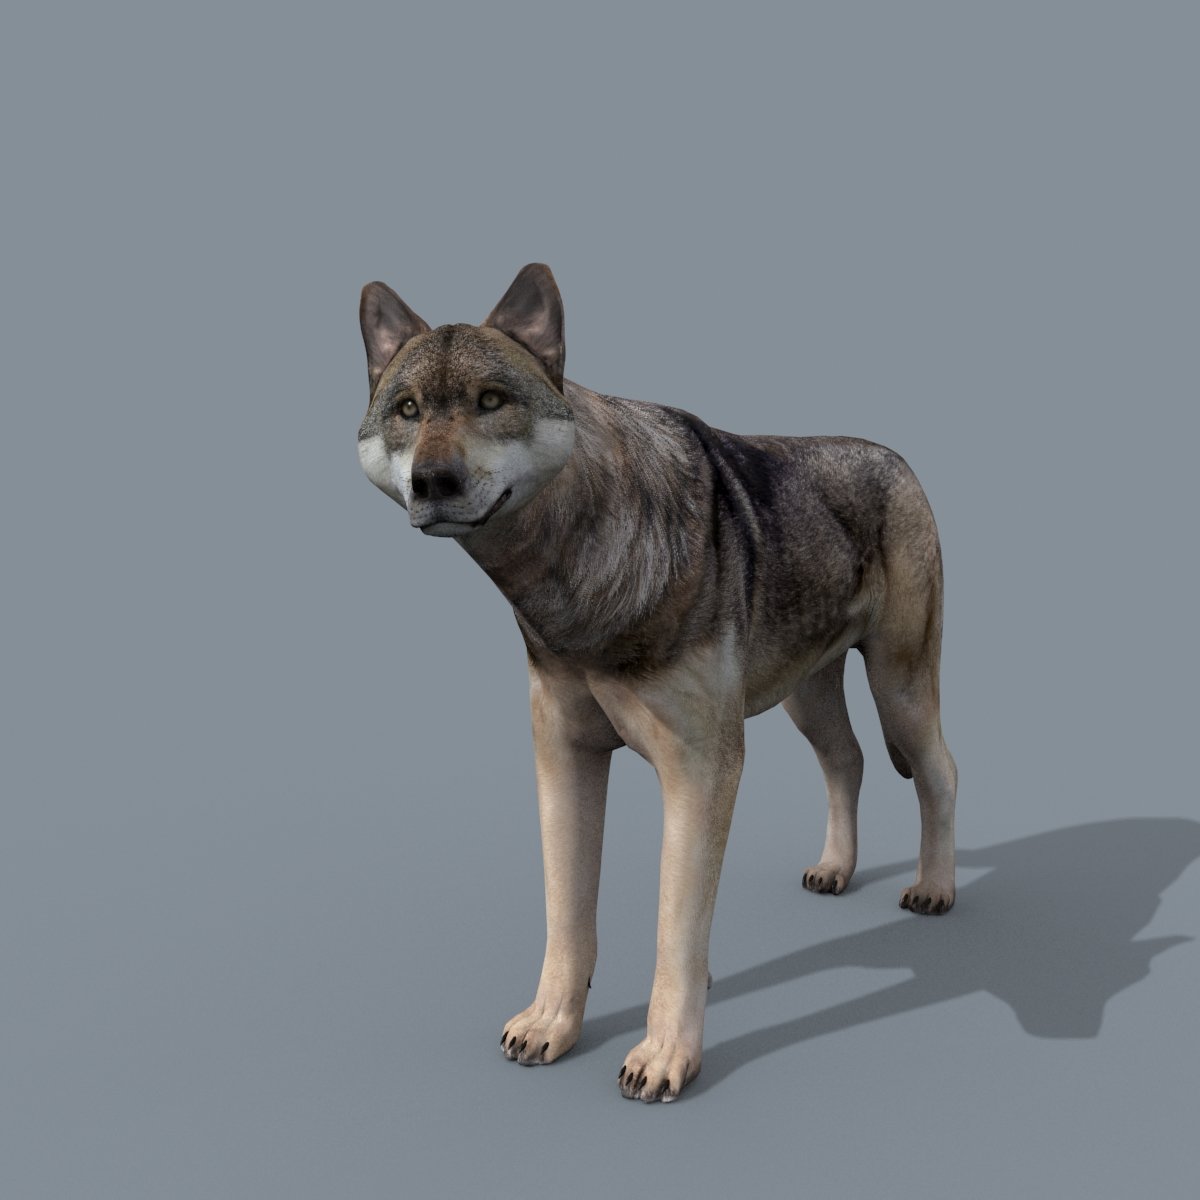 Wolf models. Волк 3d. 2d моделька волка. Wolf 3d model. Вороной 3d модель волка.